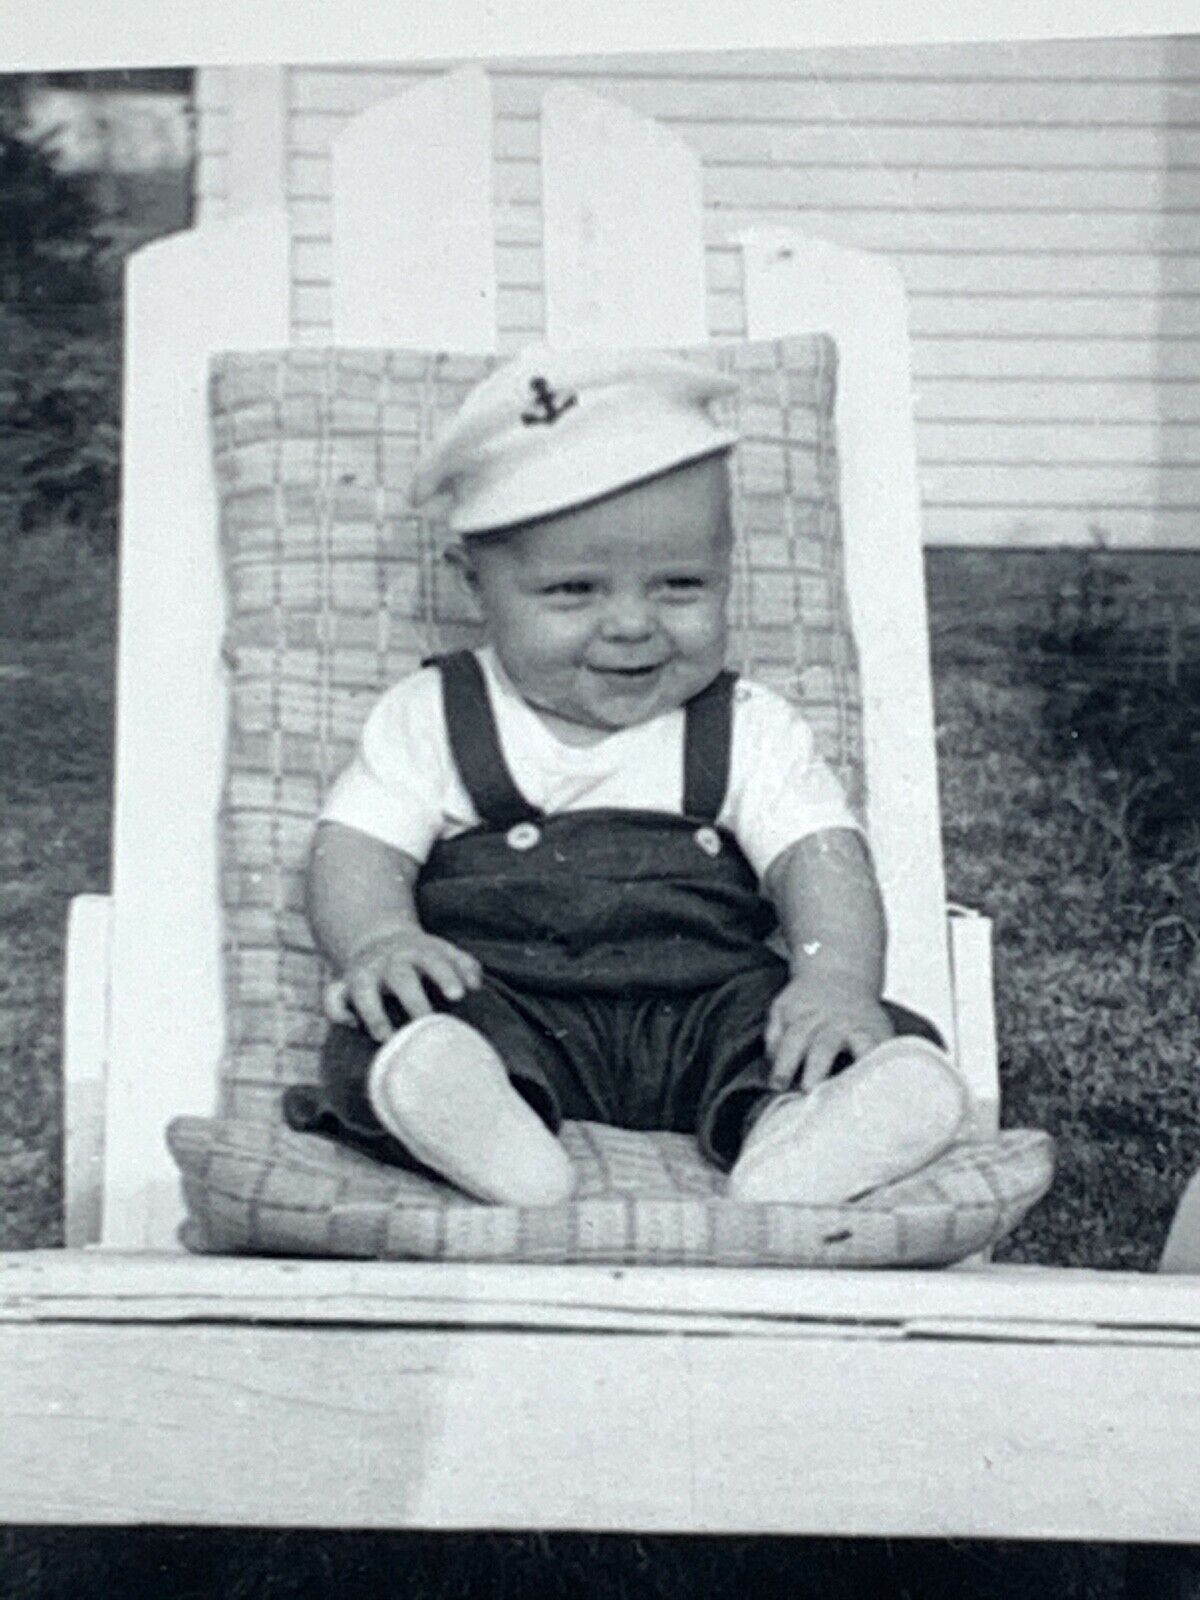 Vintage FOUND PHOTO Photograph Snapshot Happy Baby Portrait